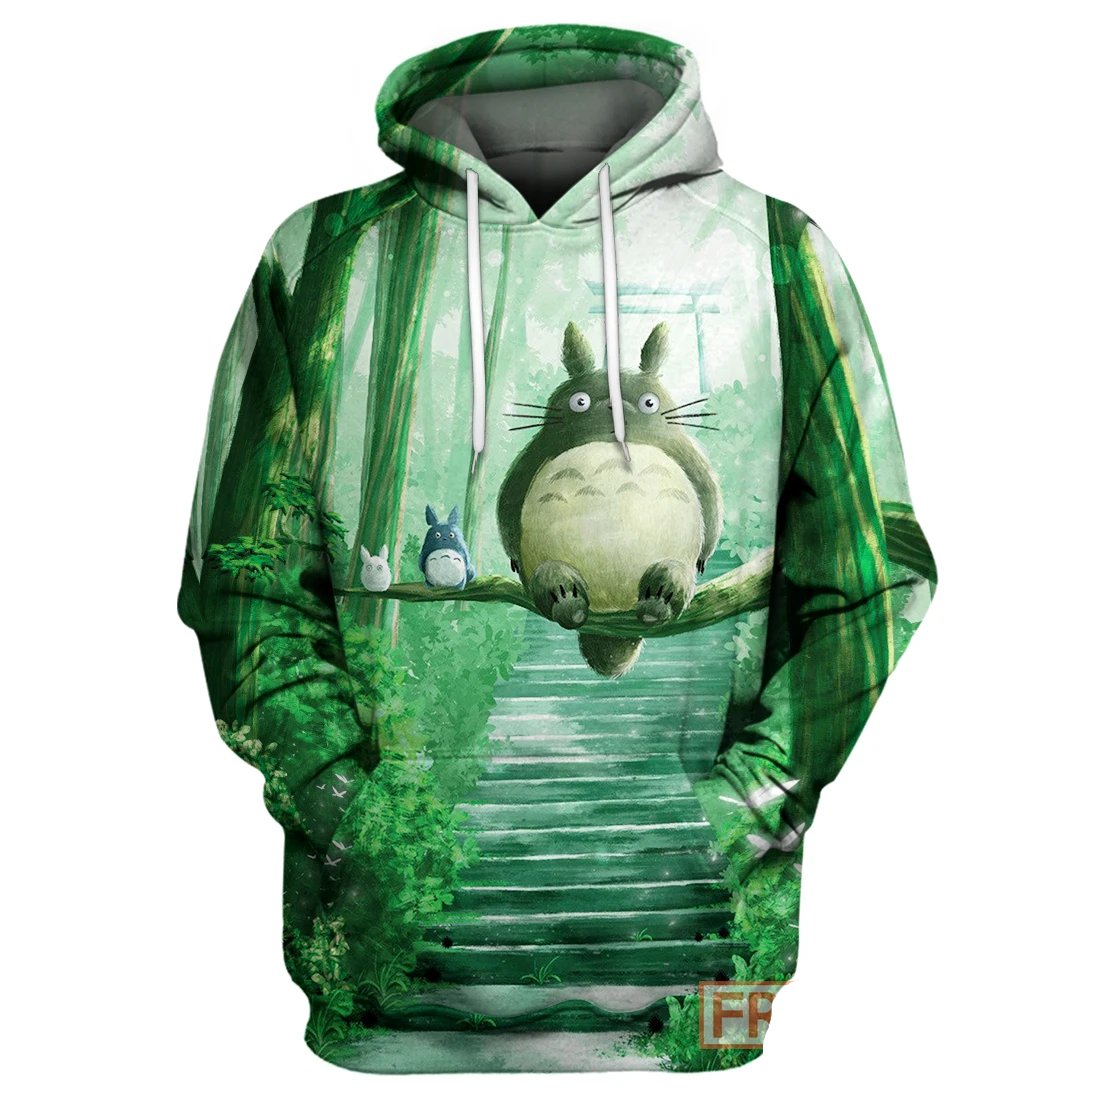 Unifinz Gb Totoro Hoodie GB Totoro And Friends Camphor Tree T-shirt Amazing GB Totoro Shirt Sweater Tank 2022